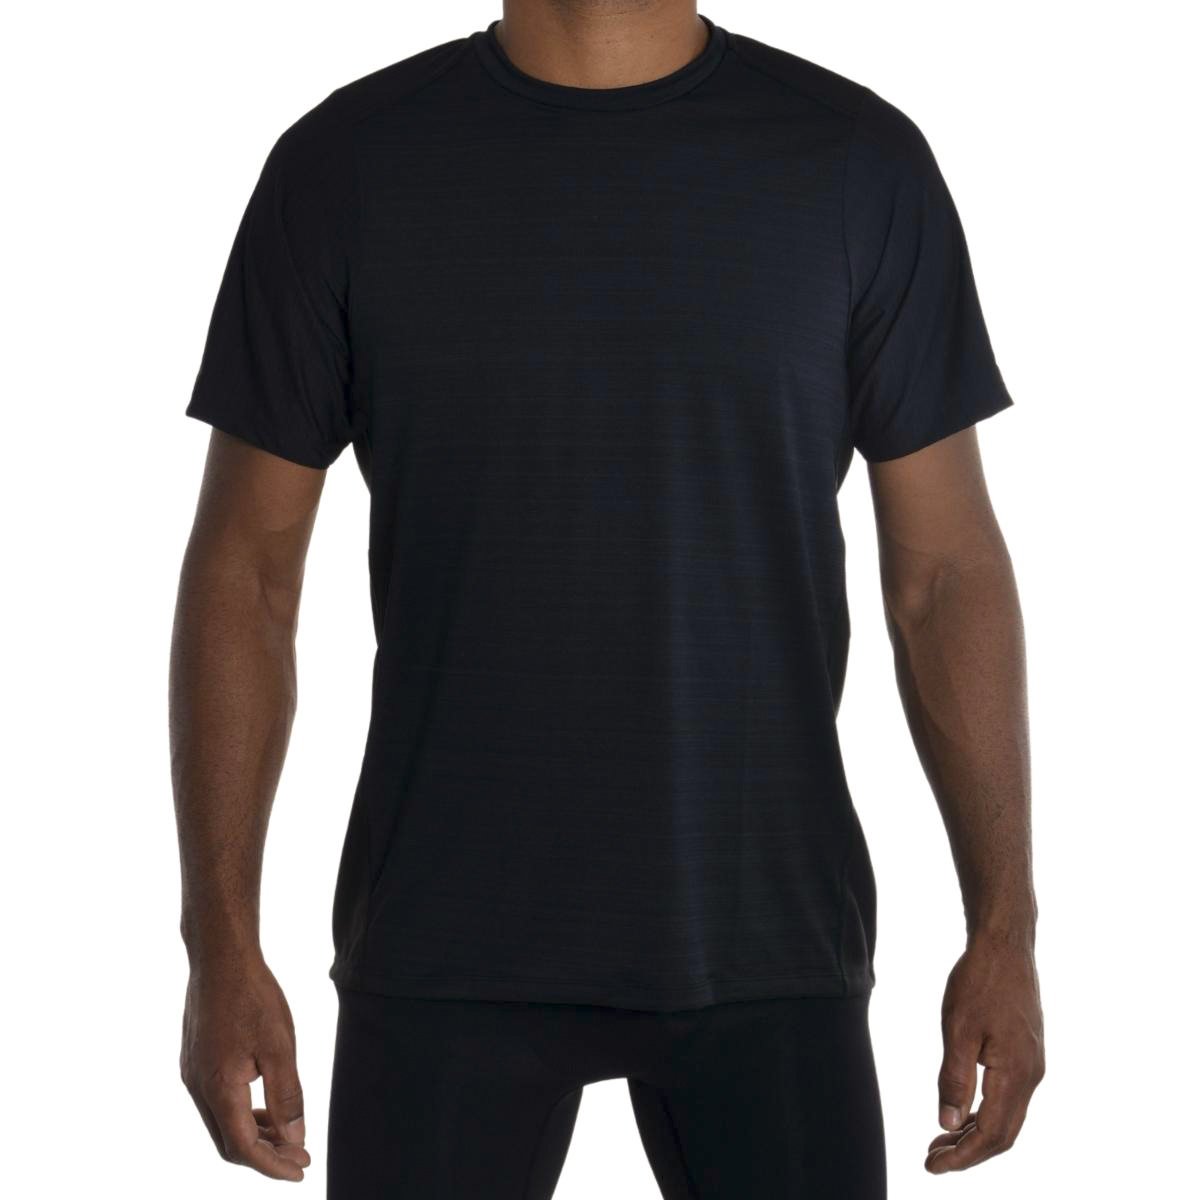 Camiseta dry fit masculina Selene Preto 1